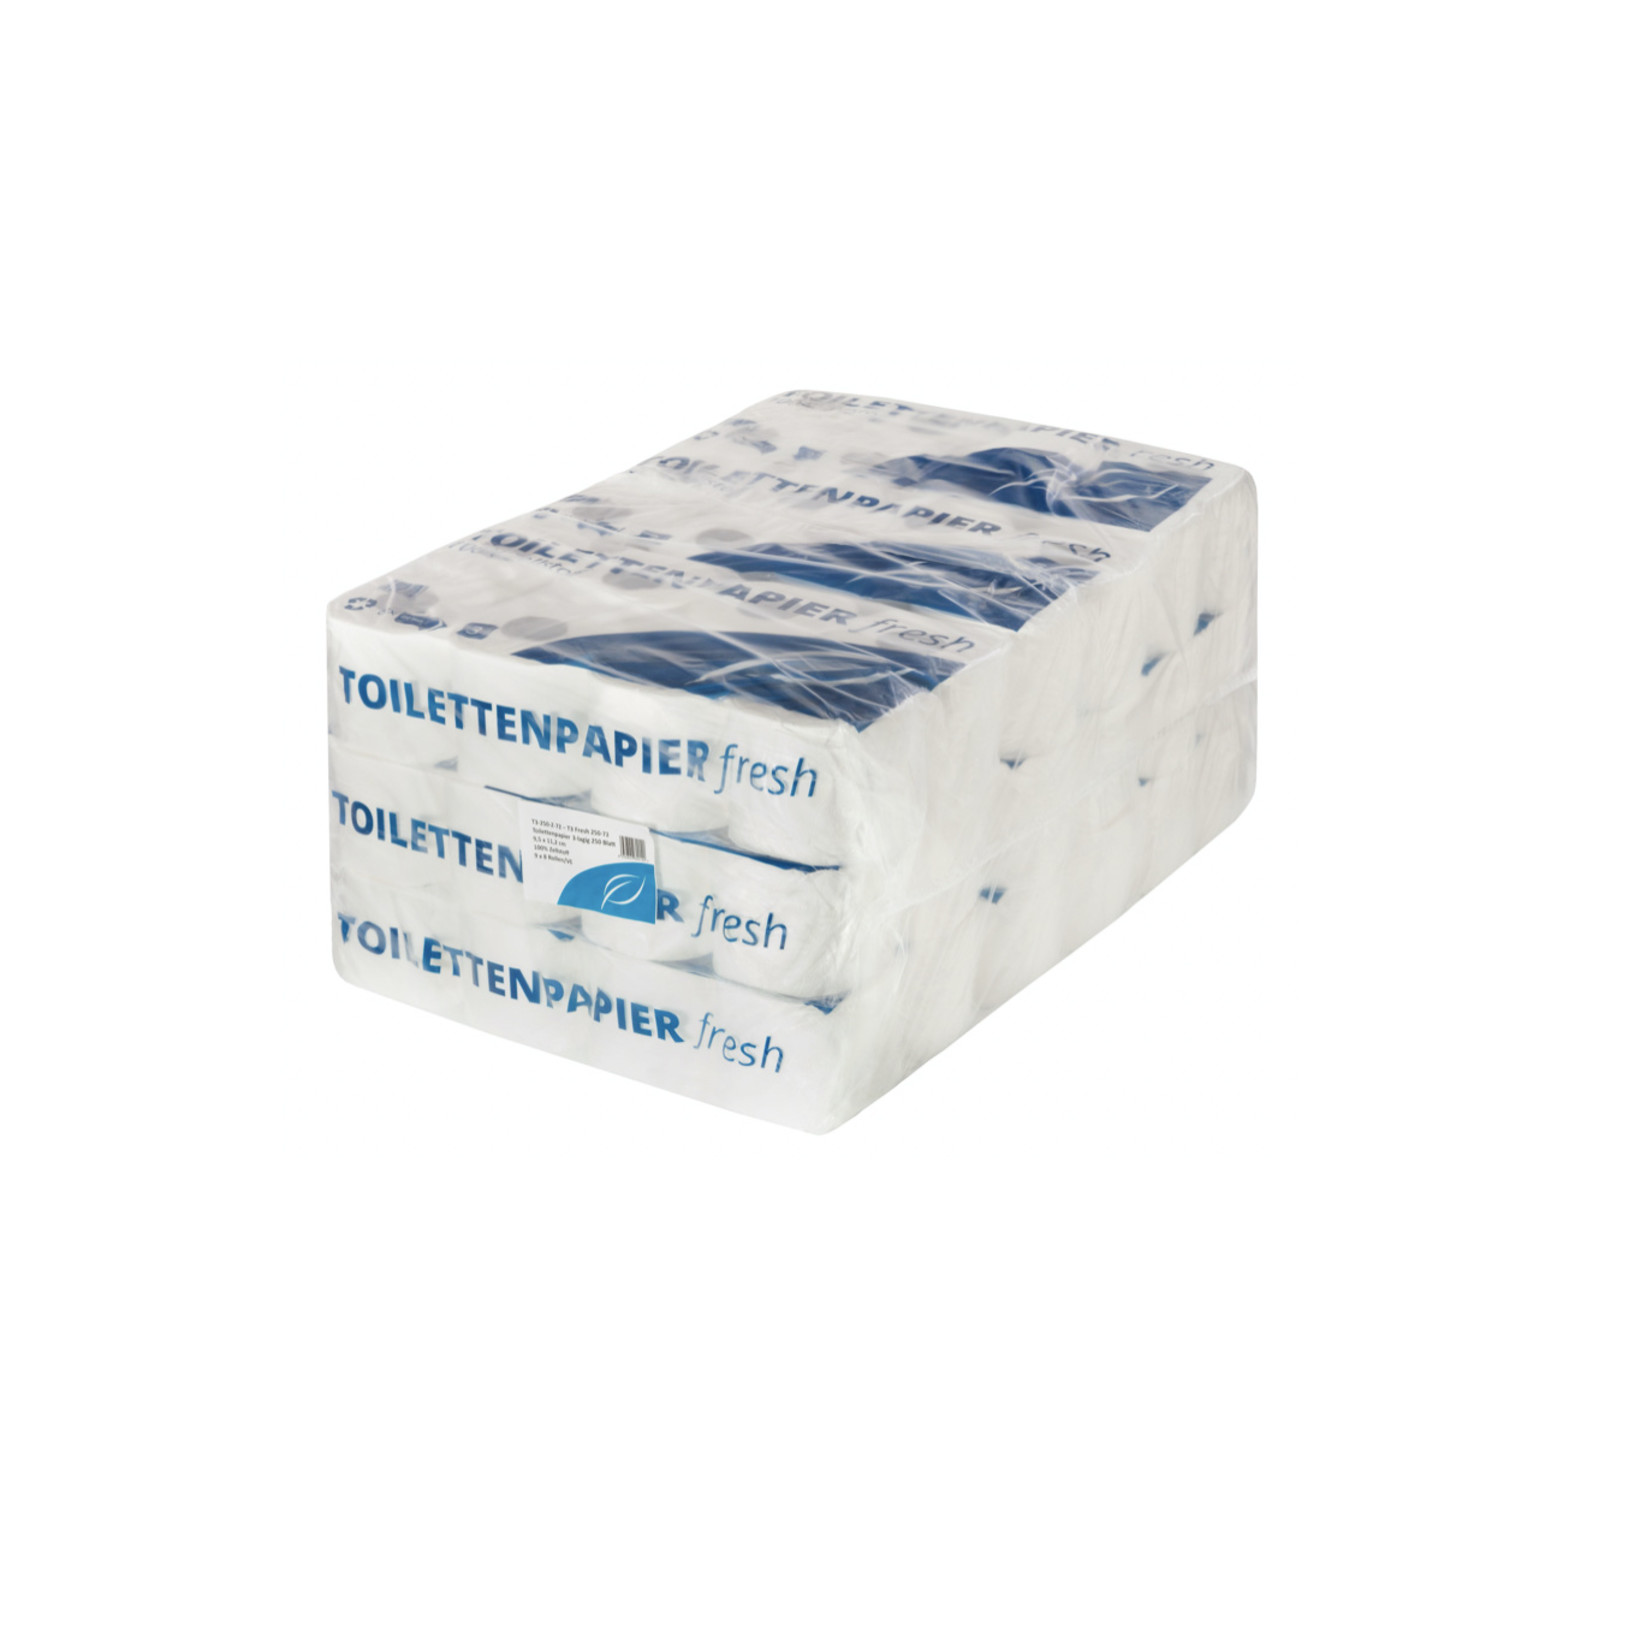 Huchtemeier Toilettenpapier, 3-lagig, 250 Blatt, 72 Rollen, Zellstoff